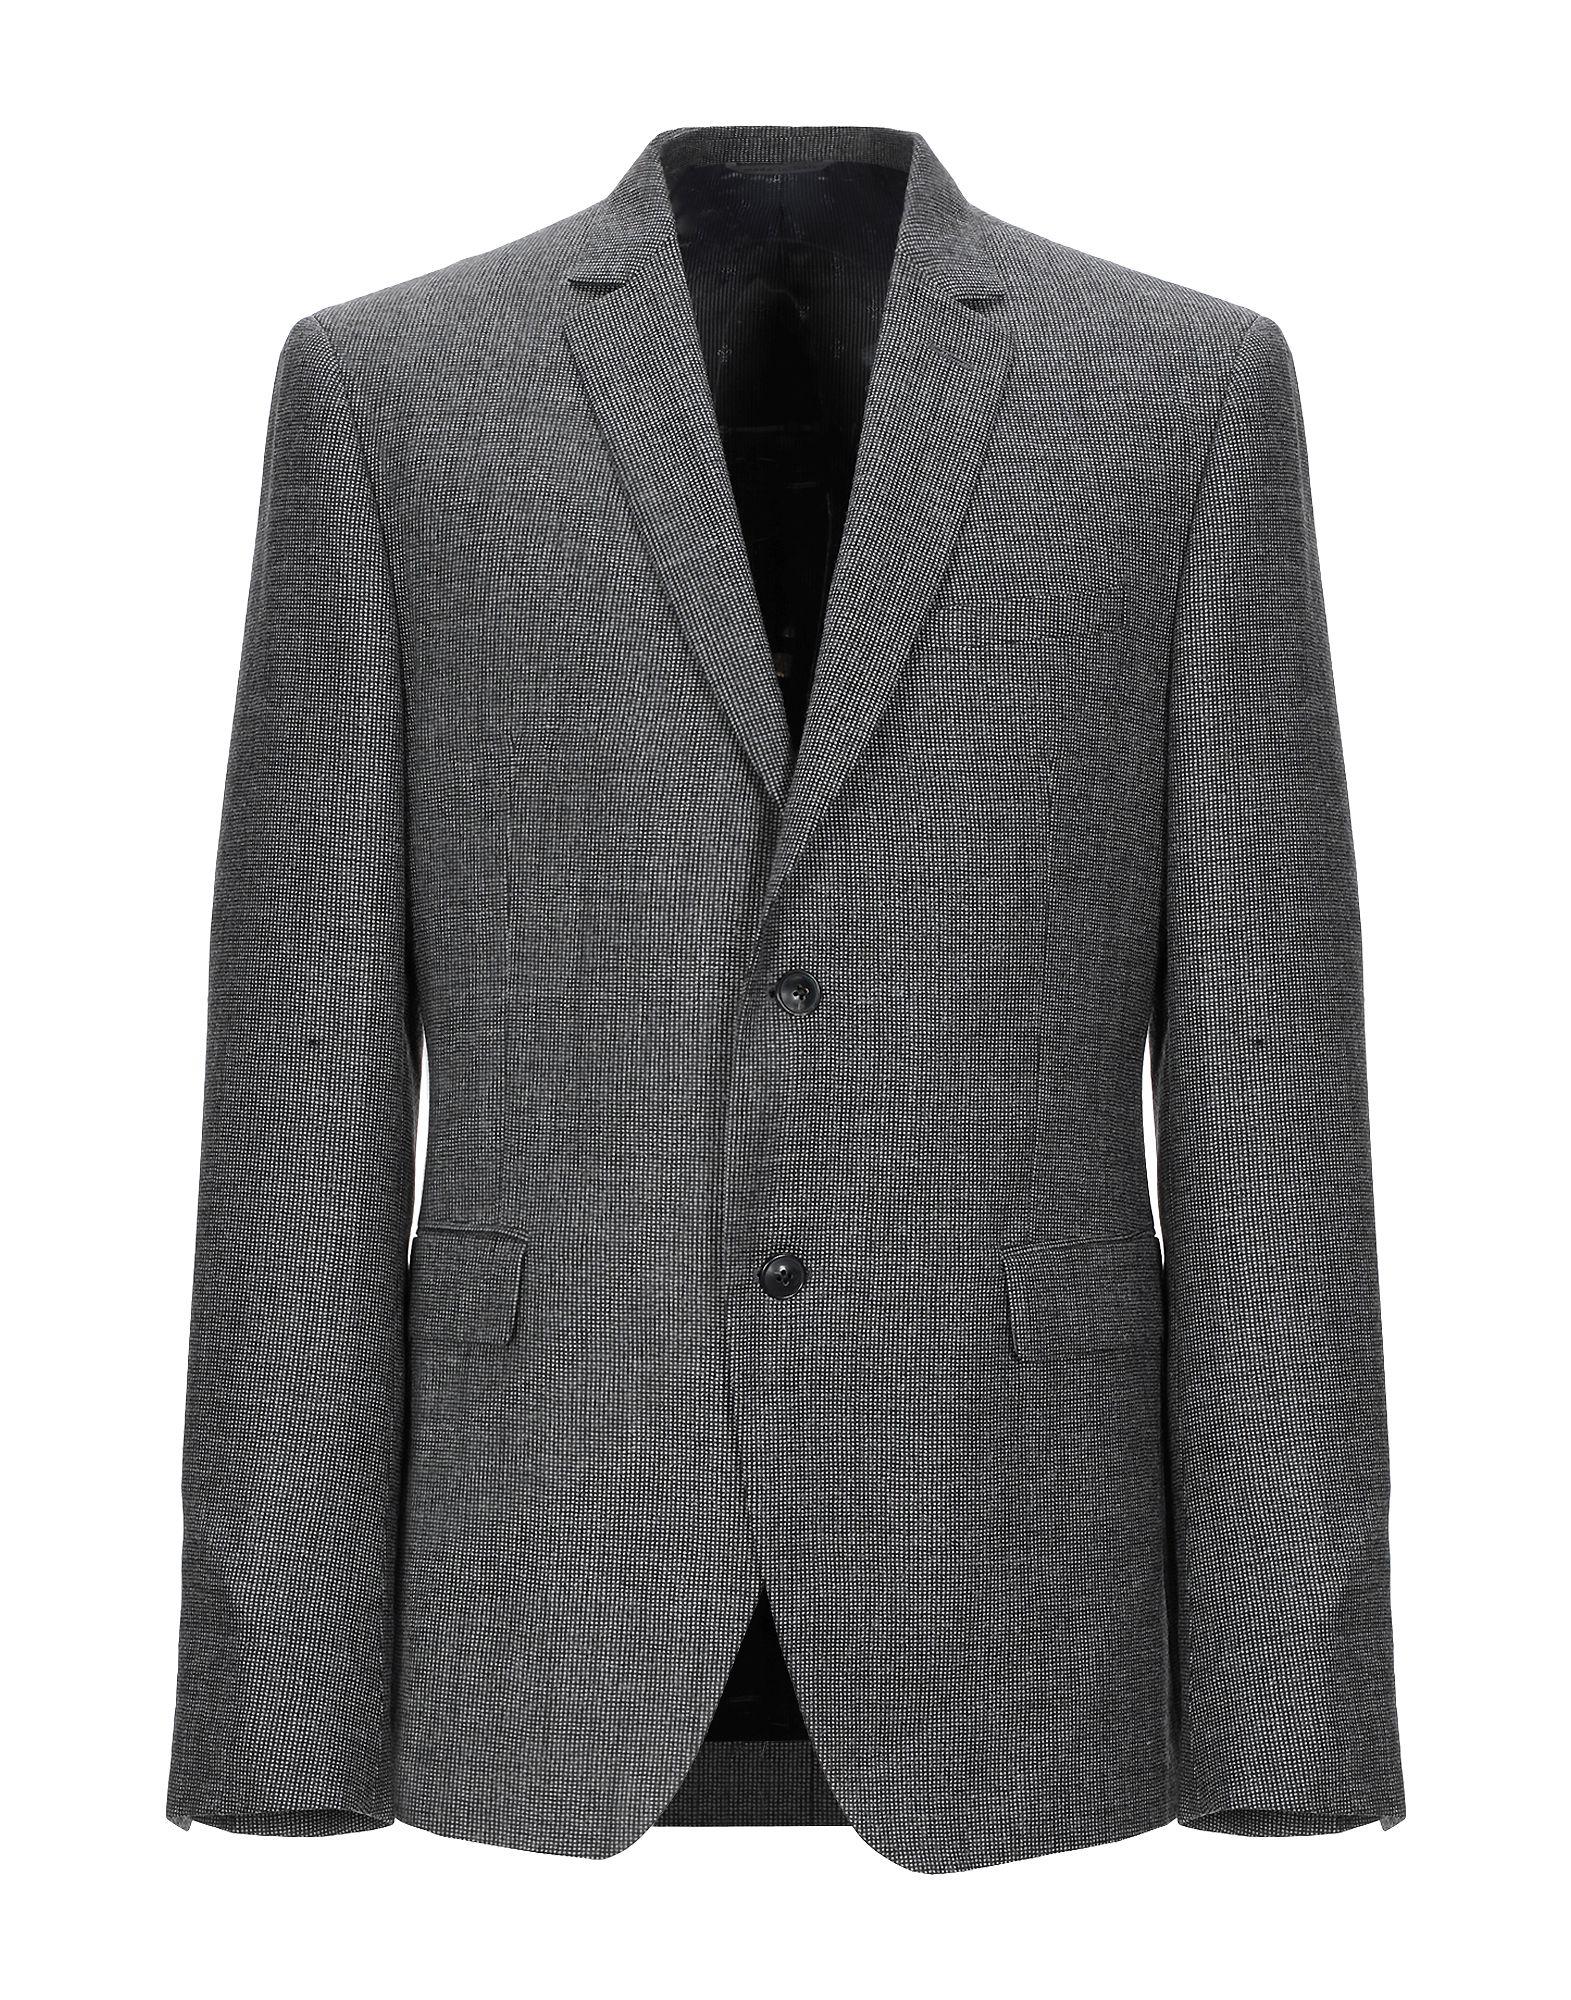 John Varvatos Flannel Blazer in Grey (Gray) for Men - Lyst